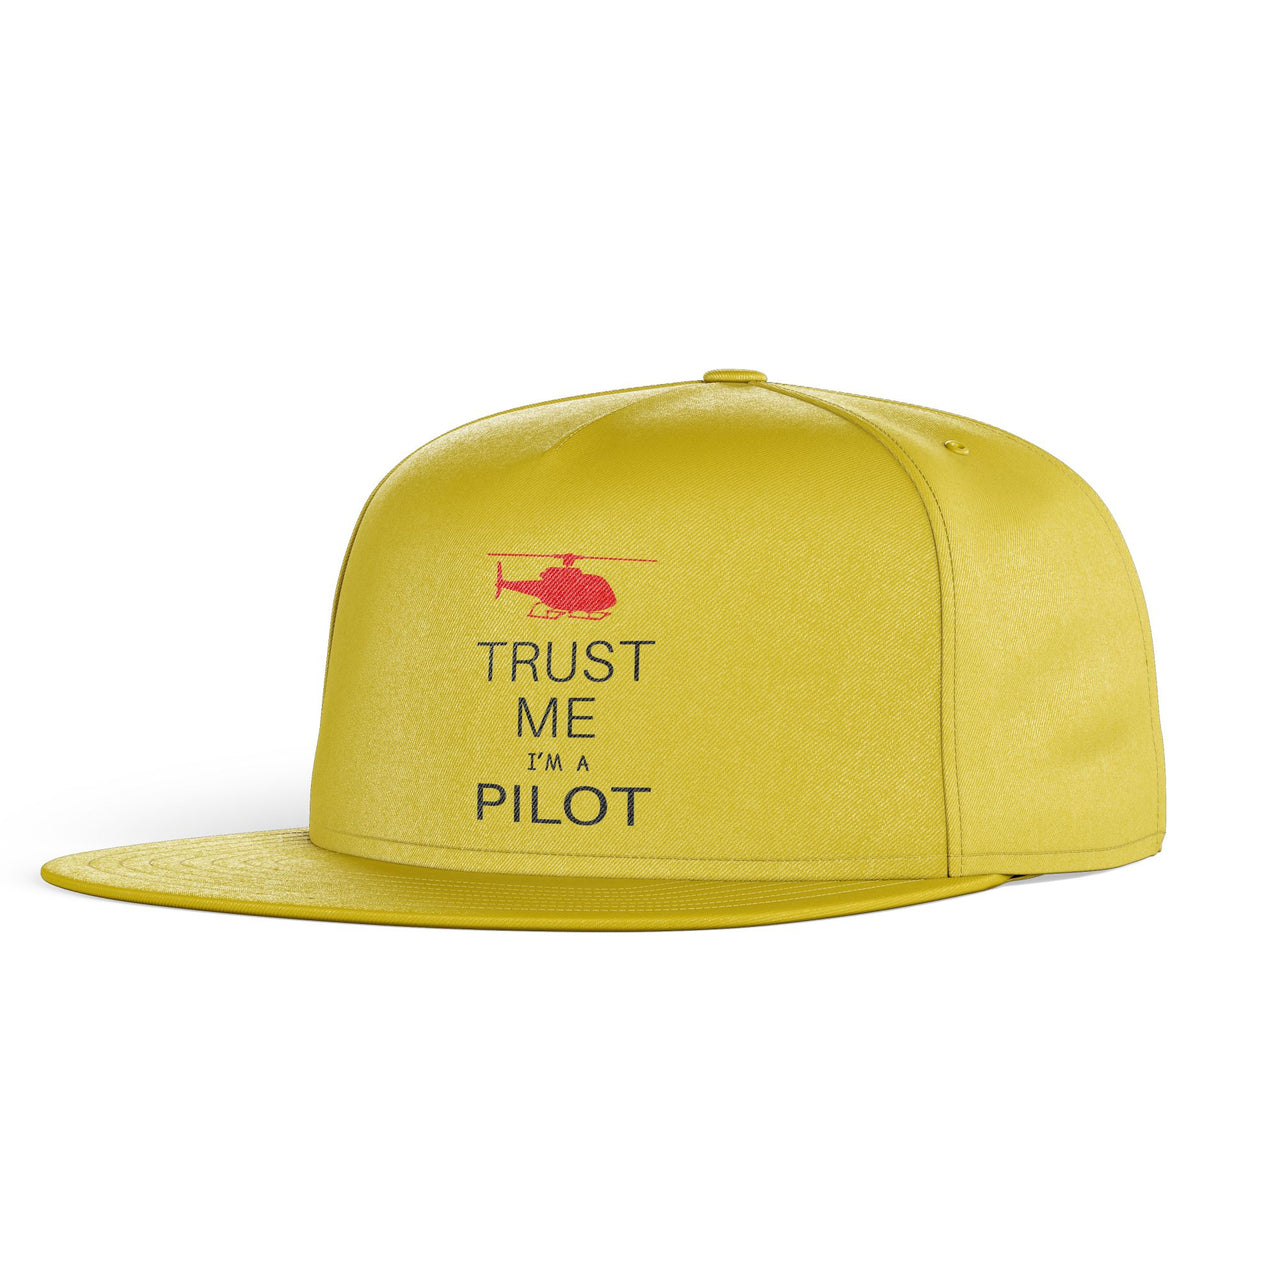 Trust Me I'm a Pilot (Helicopter) Designed Snapback Caps & Hats